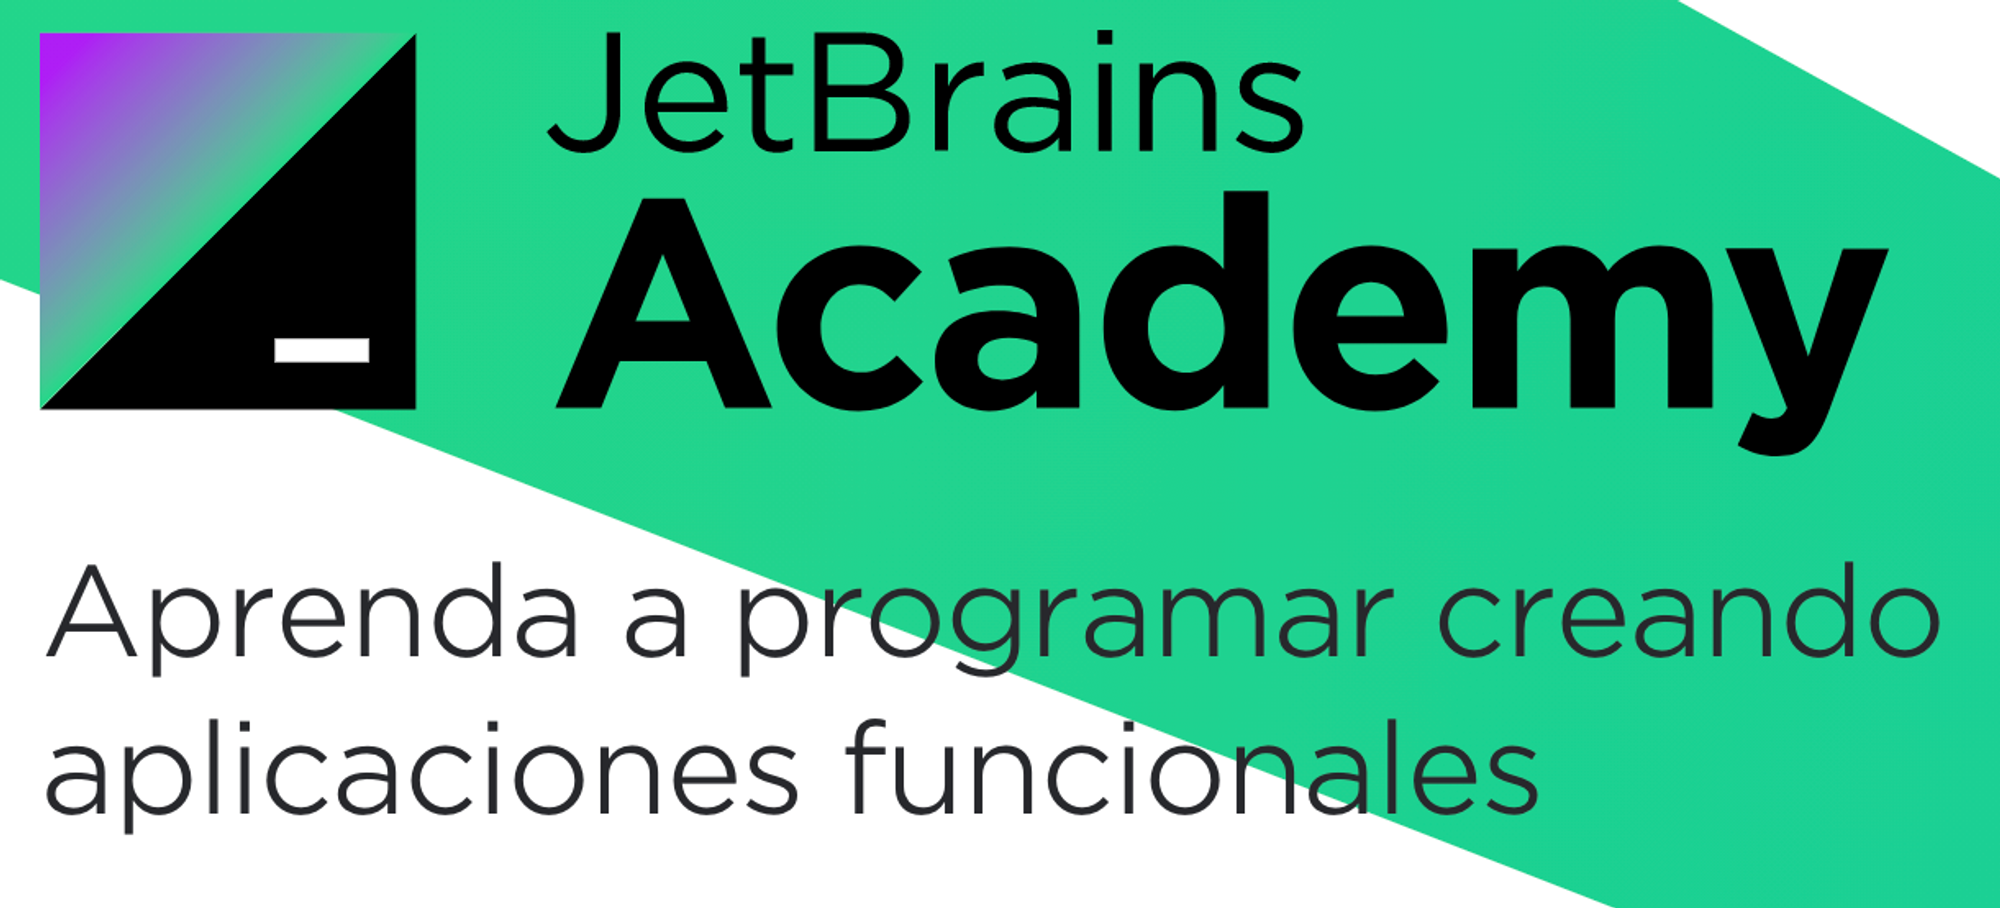 Jetbrains Academy